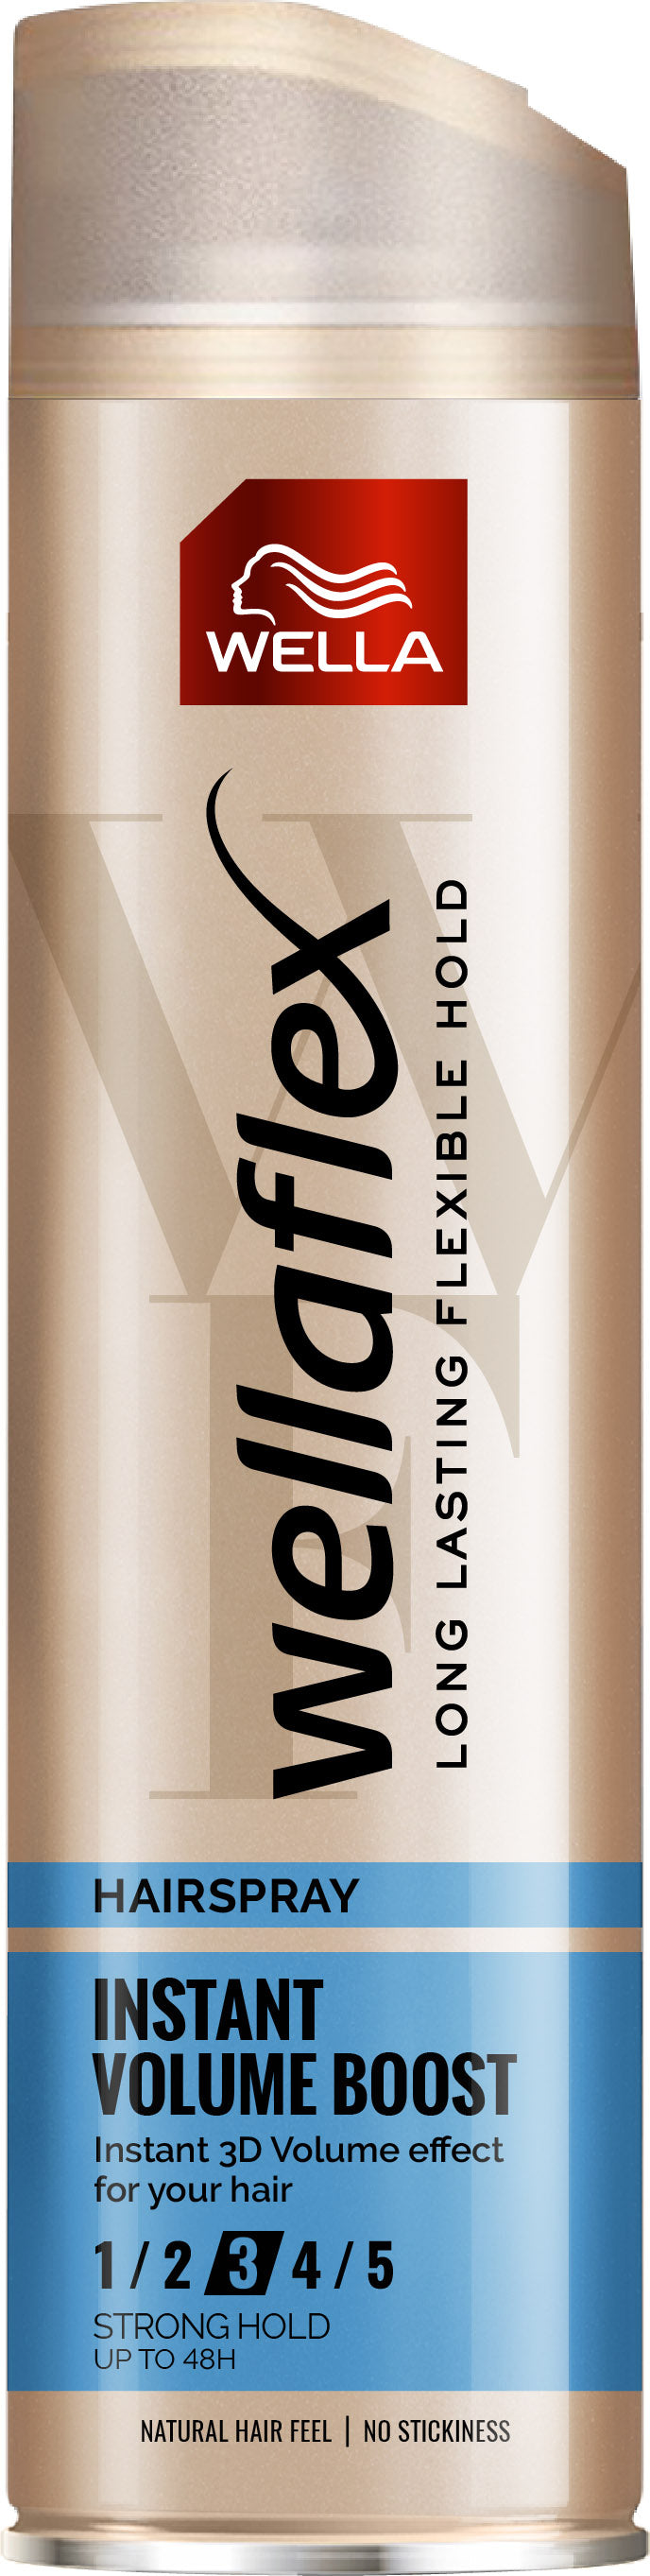 Wella Wellaflex Hairspray Instant Volume Boost 4 Extra Strong Hold 250ml